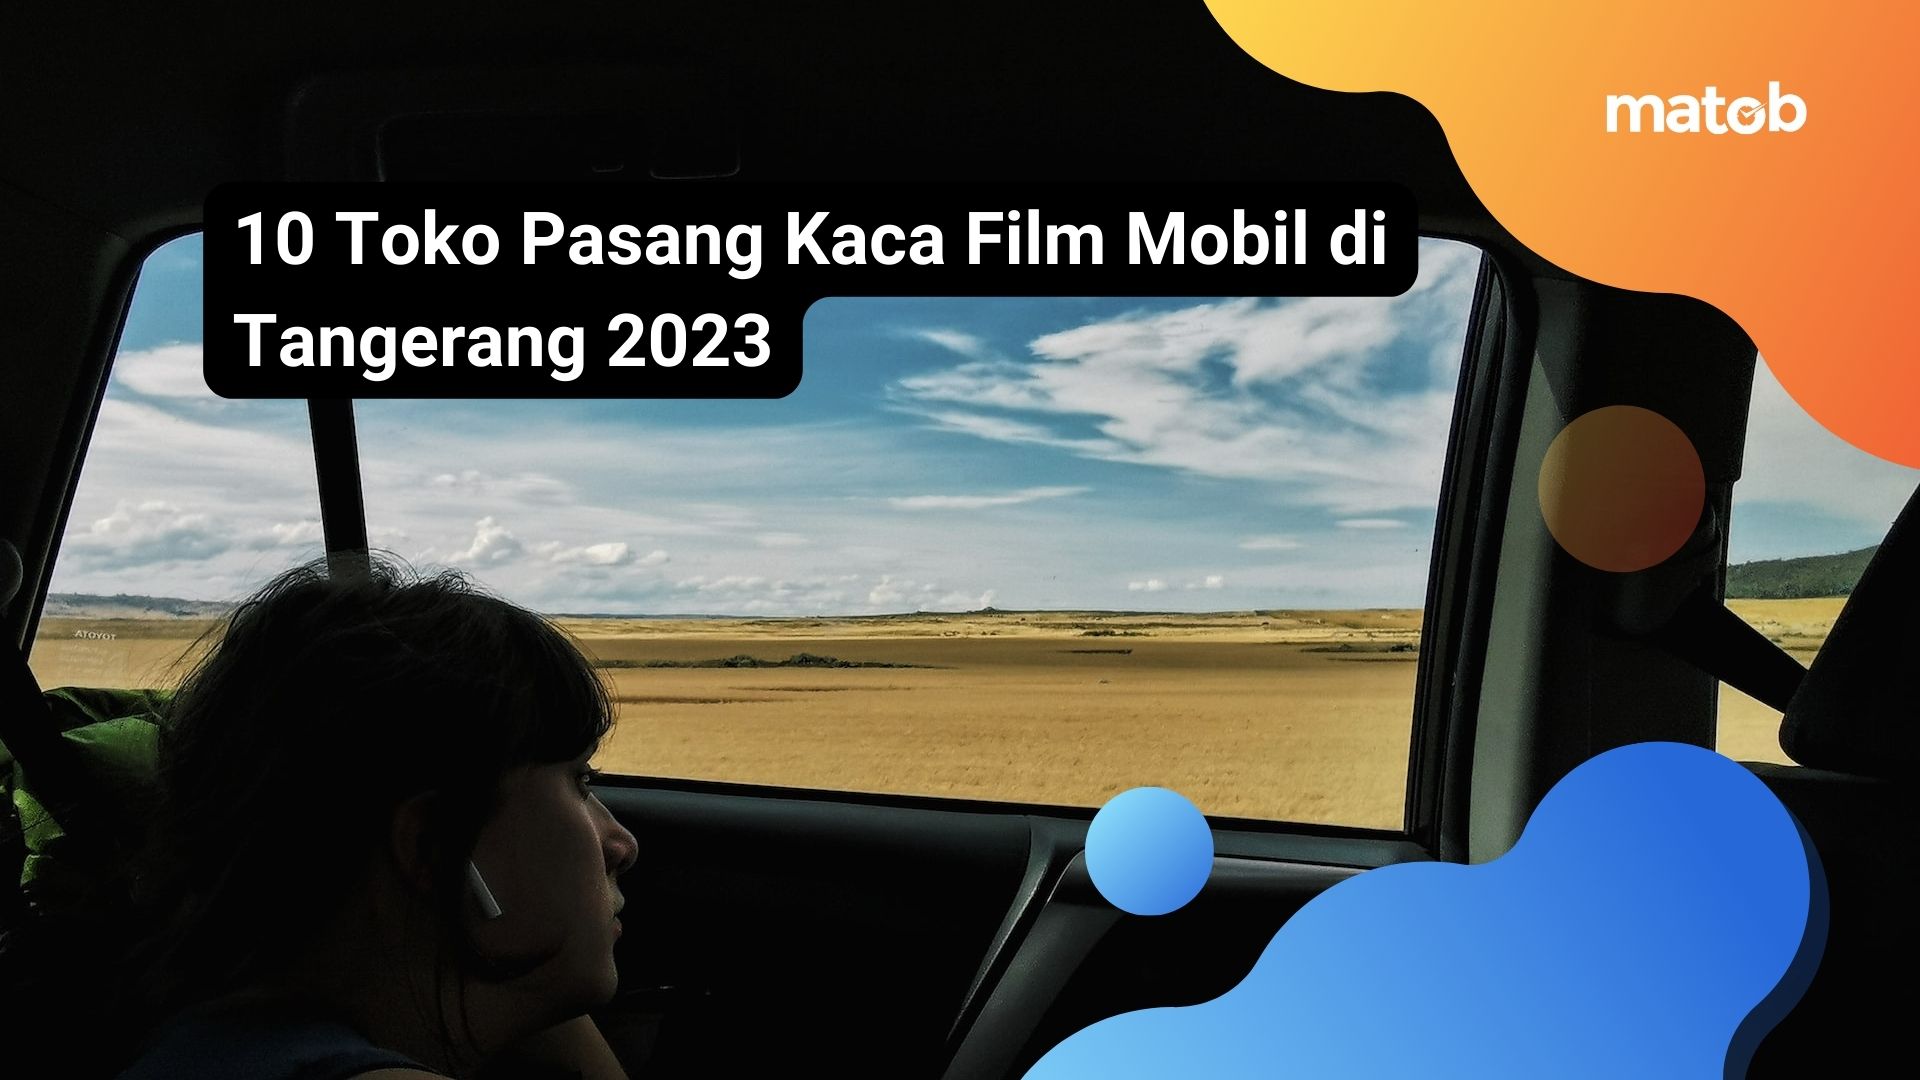 10 Toko Pasang Kaca Film Mobil di Tangerang 2023